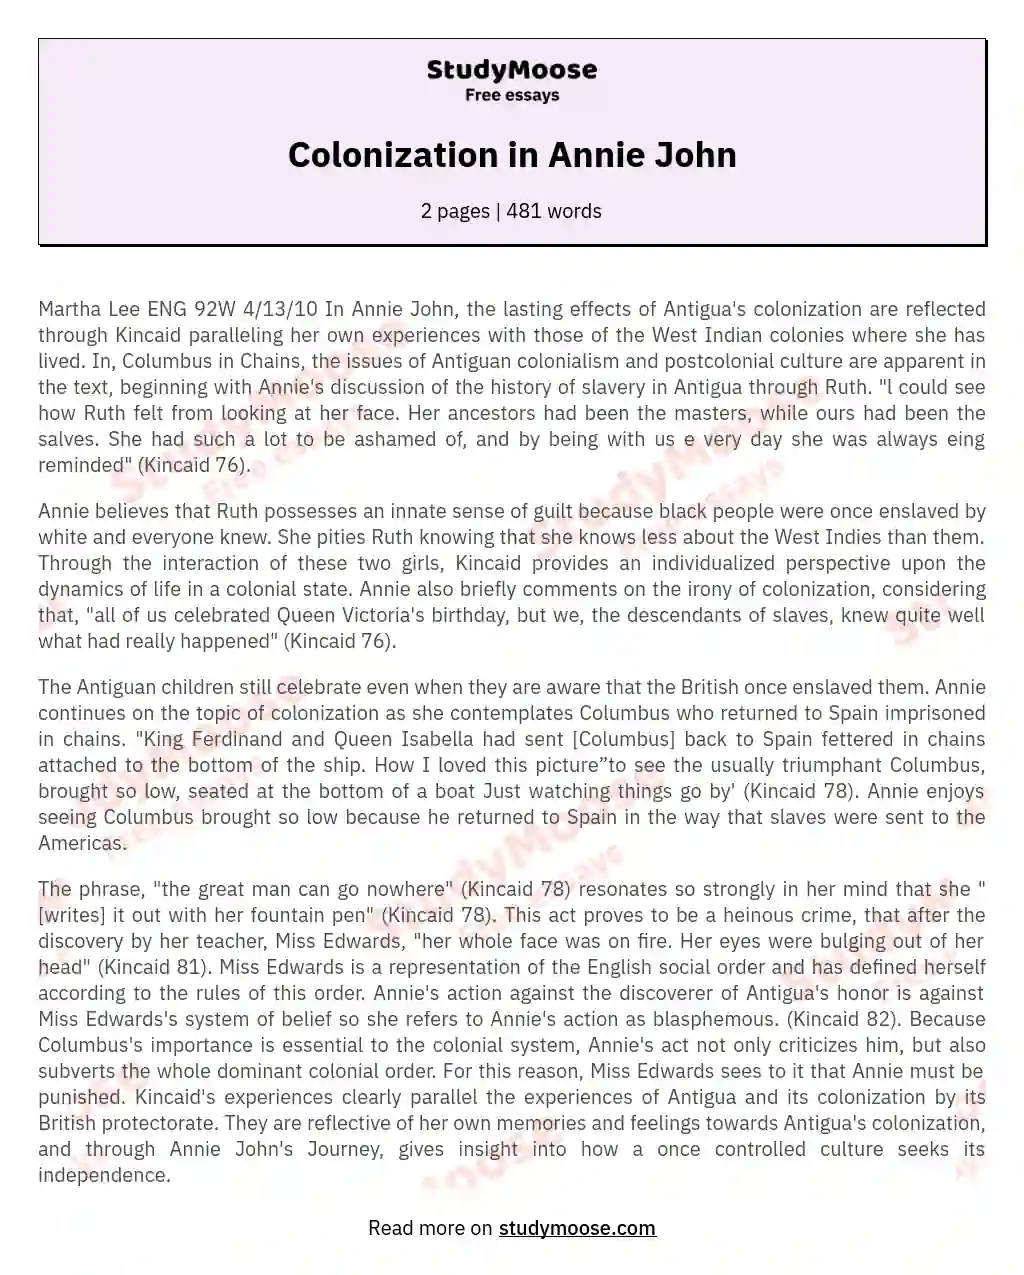 Colonization in Annie John essay